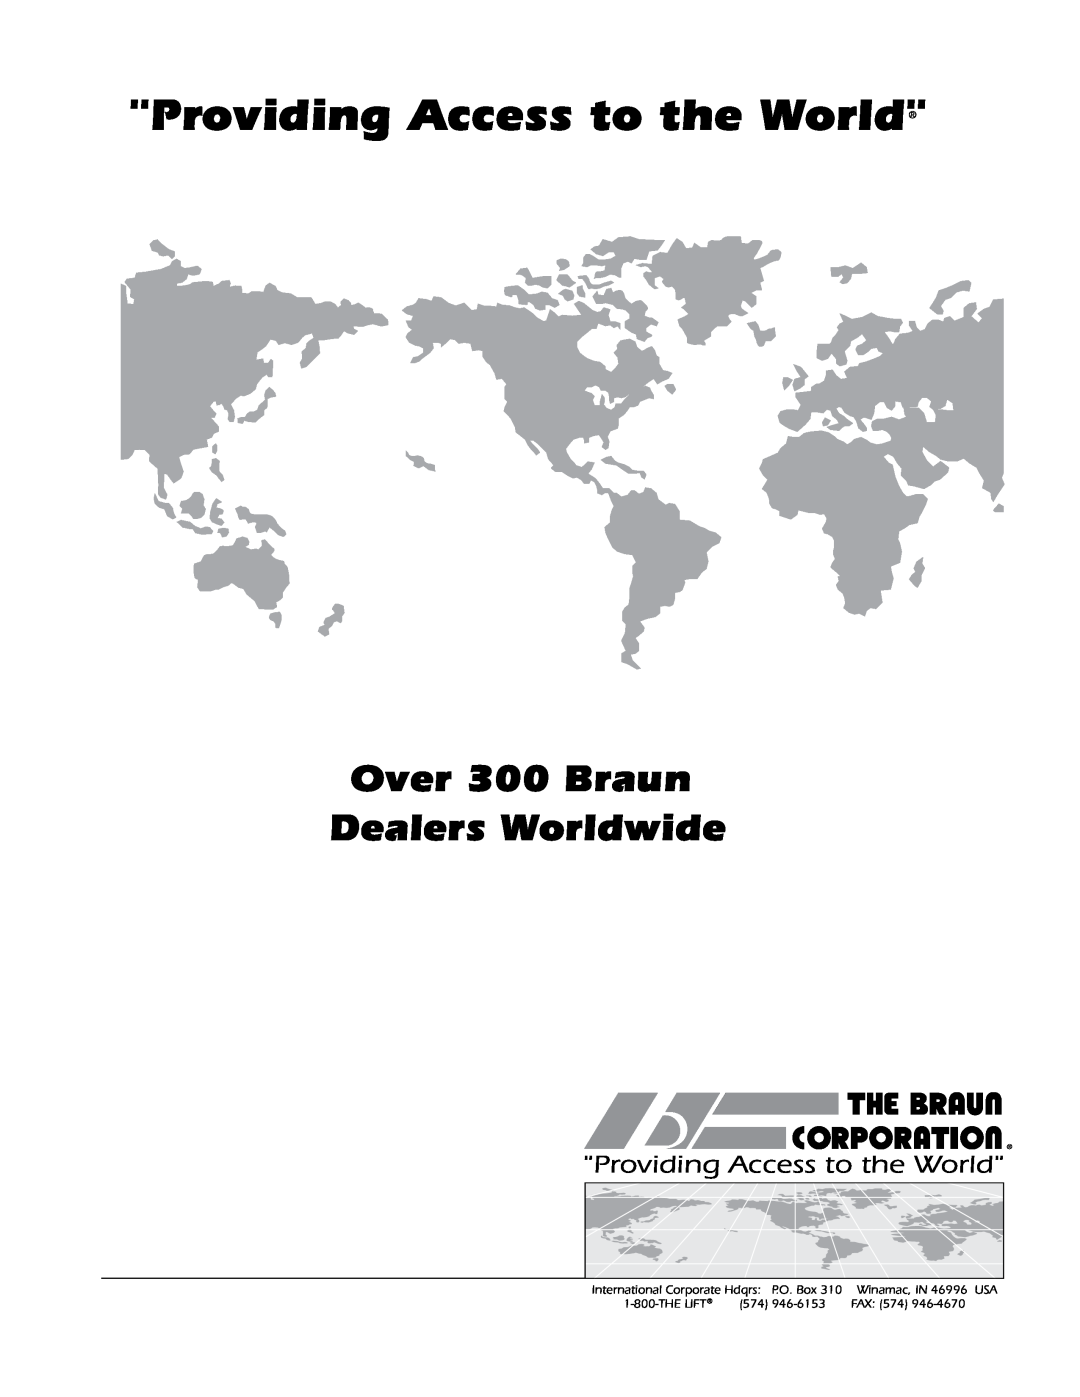 Braun RA500 Providing Access to the World, Over 300 Braun Dealers Worldwide, International Corporate Hdqrs P.O. Box, Fax 